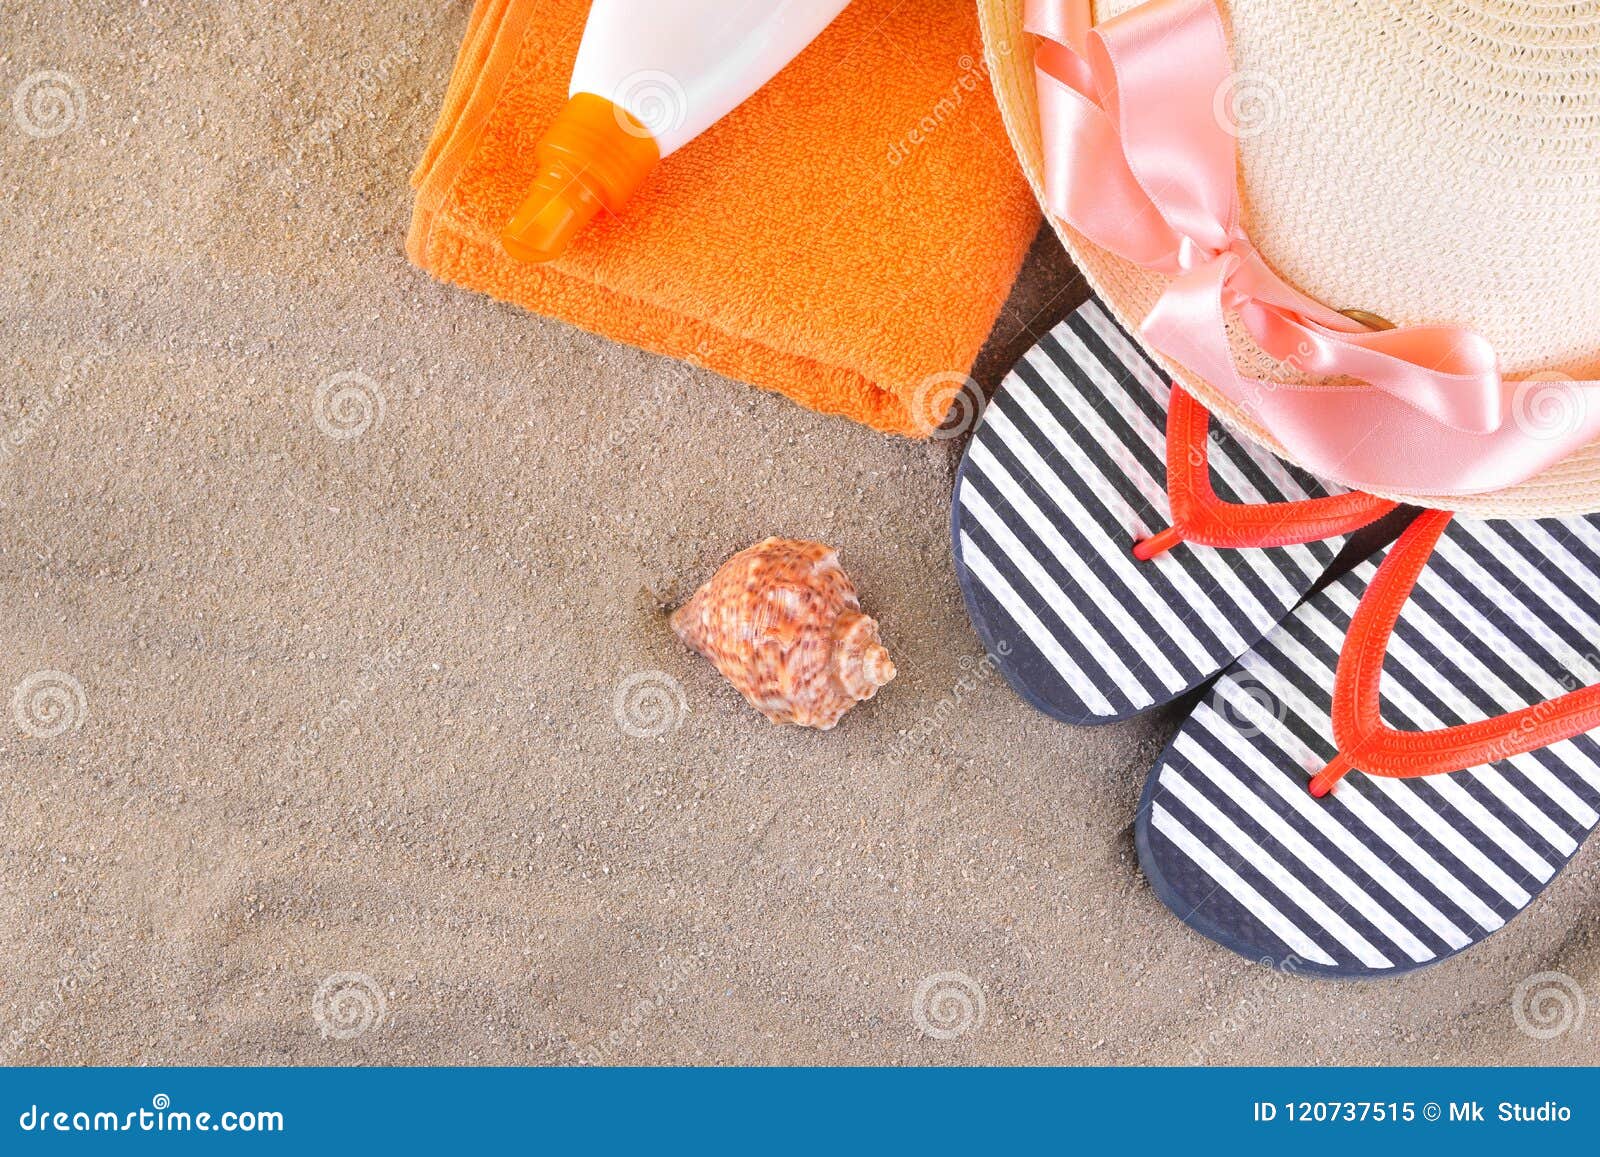 Beach Accessories. Flip-flops, a Hat and a Sunscreen on an Orange Towel ...